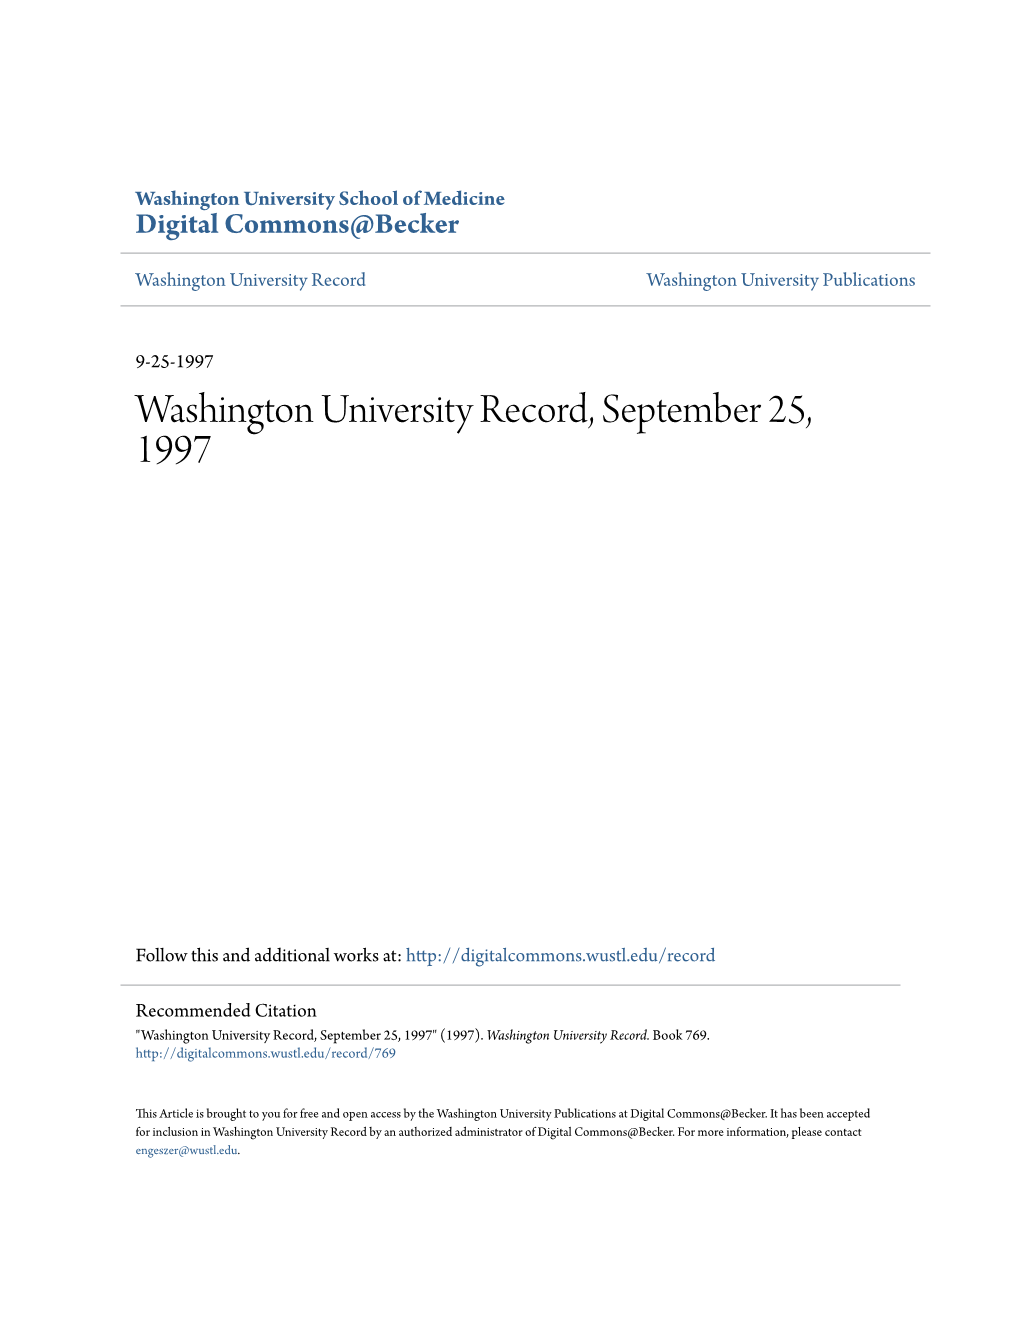 Washington University Record, September 25, 1997